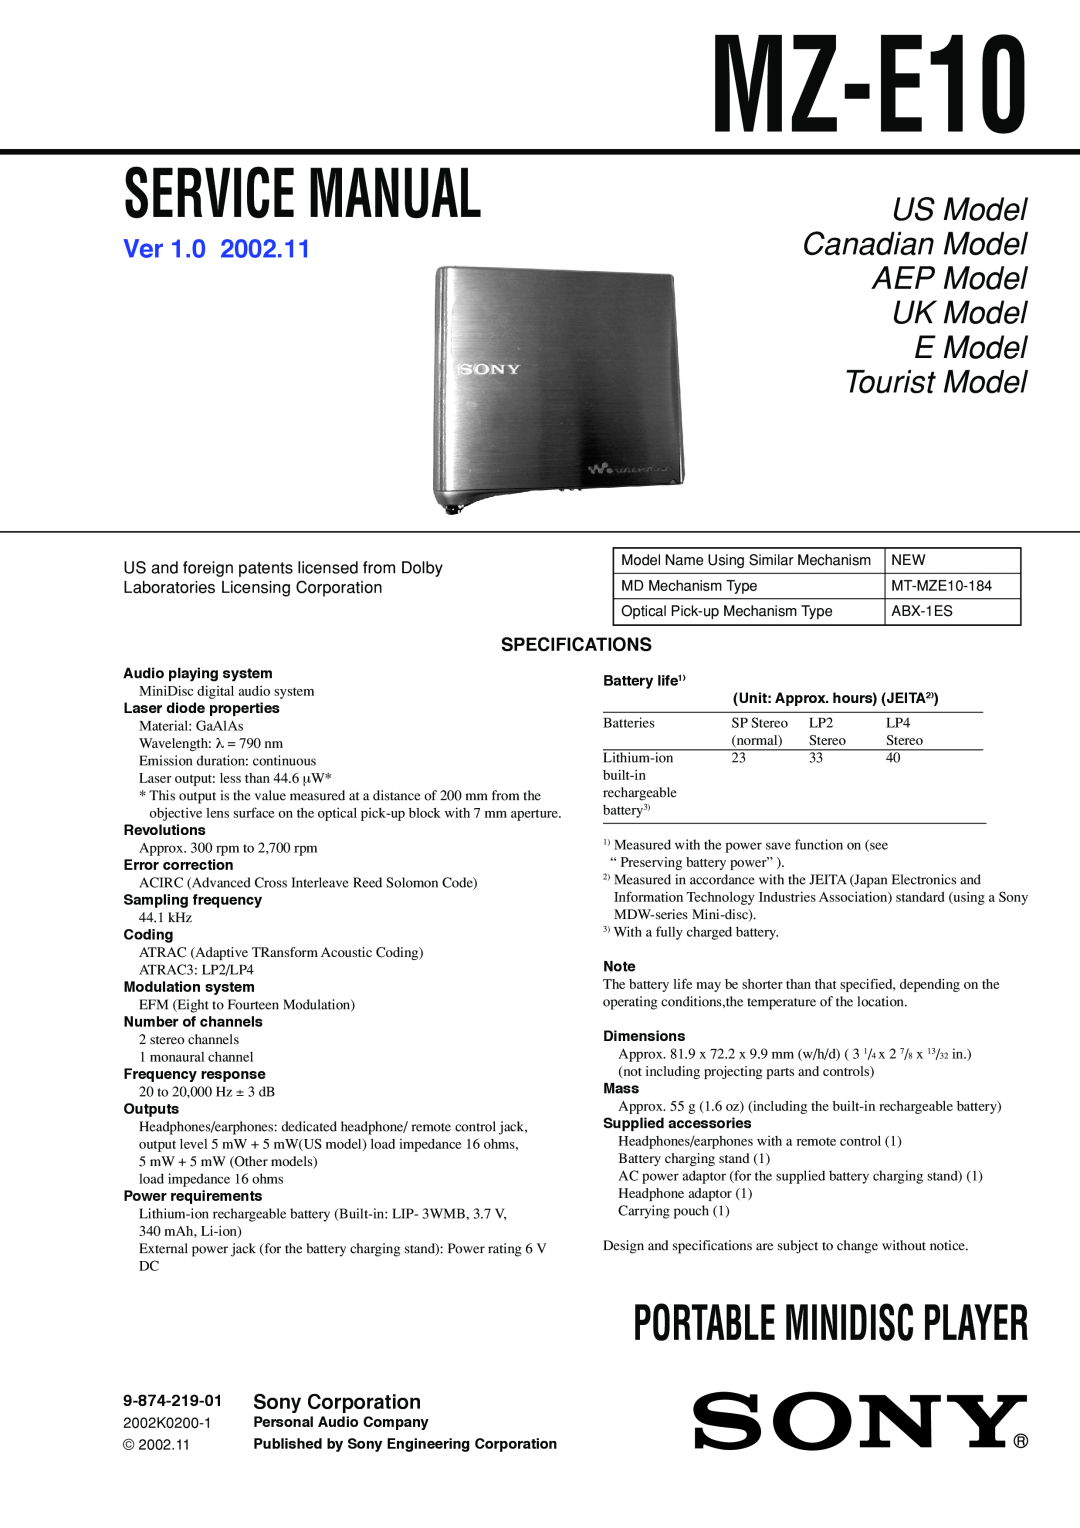 Sony MZ-E10 service manual Portable Minidisc Player, US Model Canadian Model AEP Model UK Model, E Model Tourist Model 